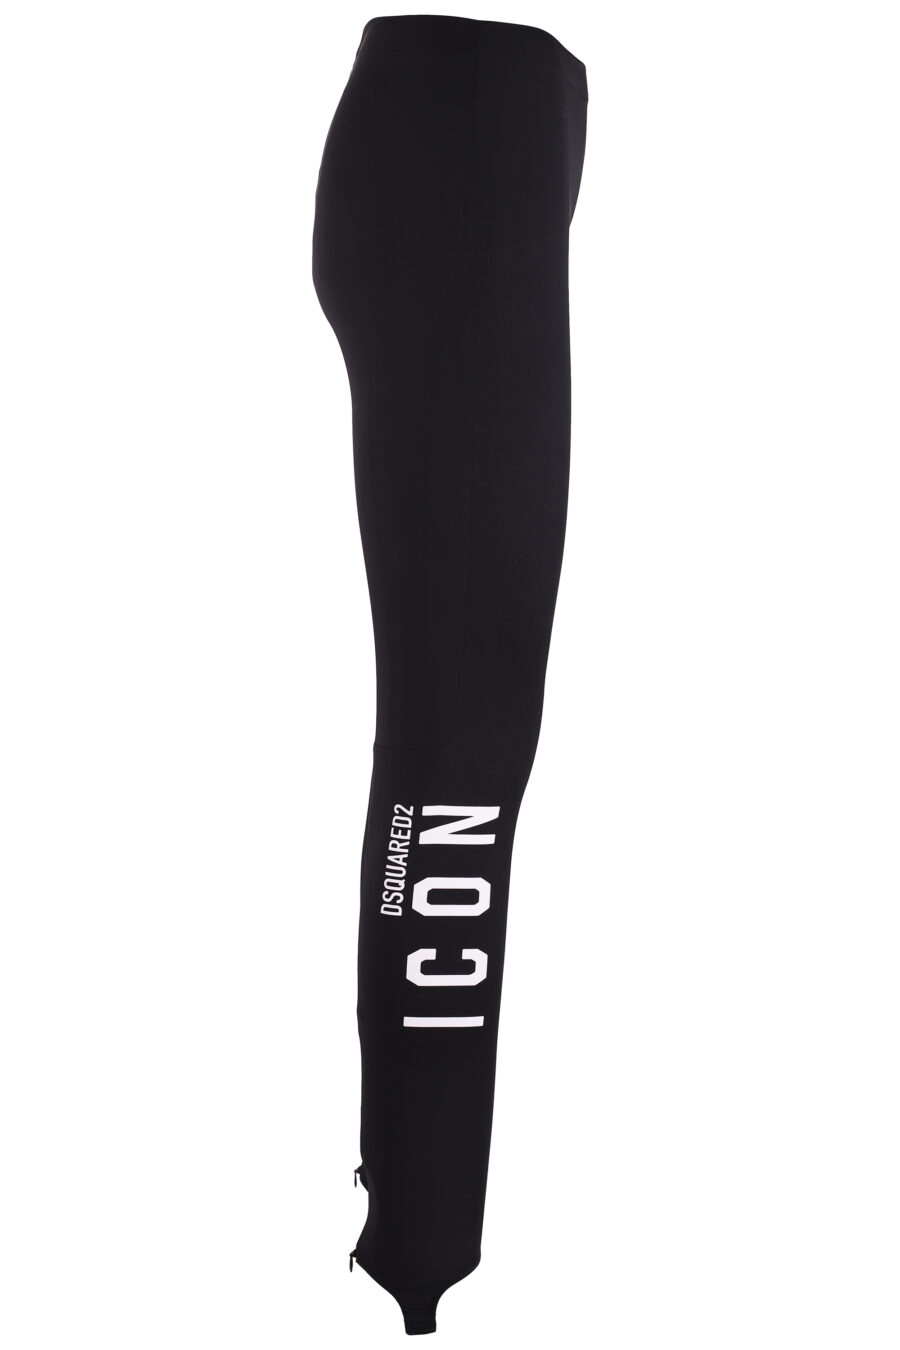 Black leggings with vertical "icon" logo - IMG 3710